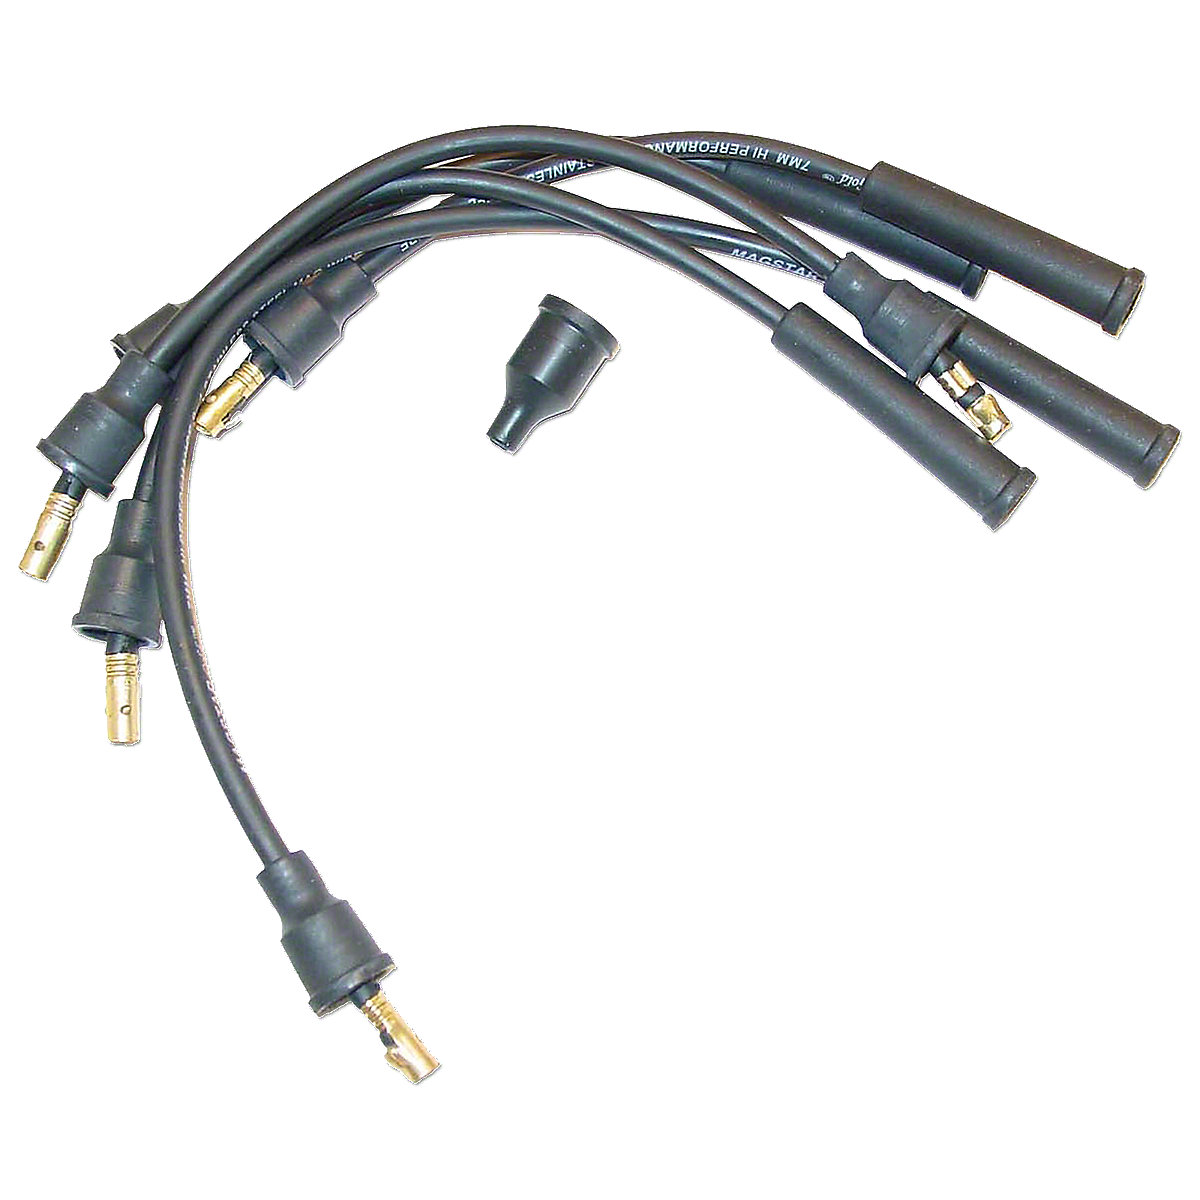 Spark Plug Wire Set For Allis Chalmers: B, C, CA, D10, D12, D14, D15, D17, I40, I400, I500, I60, I600, IB, RC, WC, WD, WD45, WF, 170, 175, 510, 512, 514, 610, 612, 614